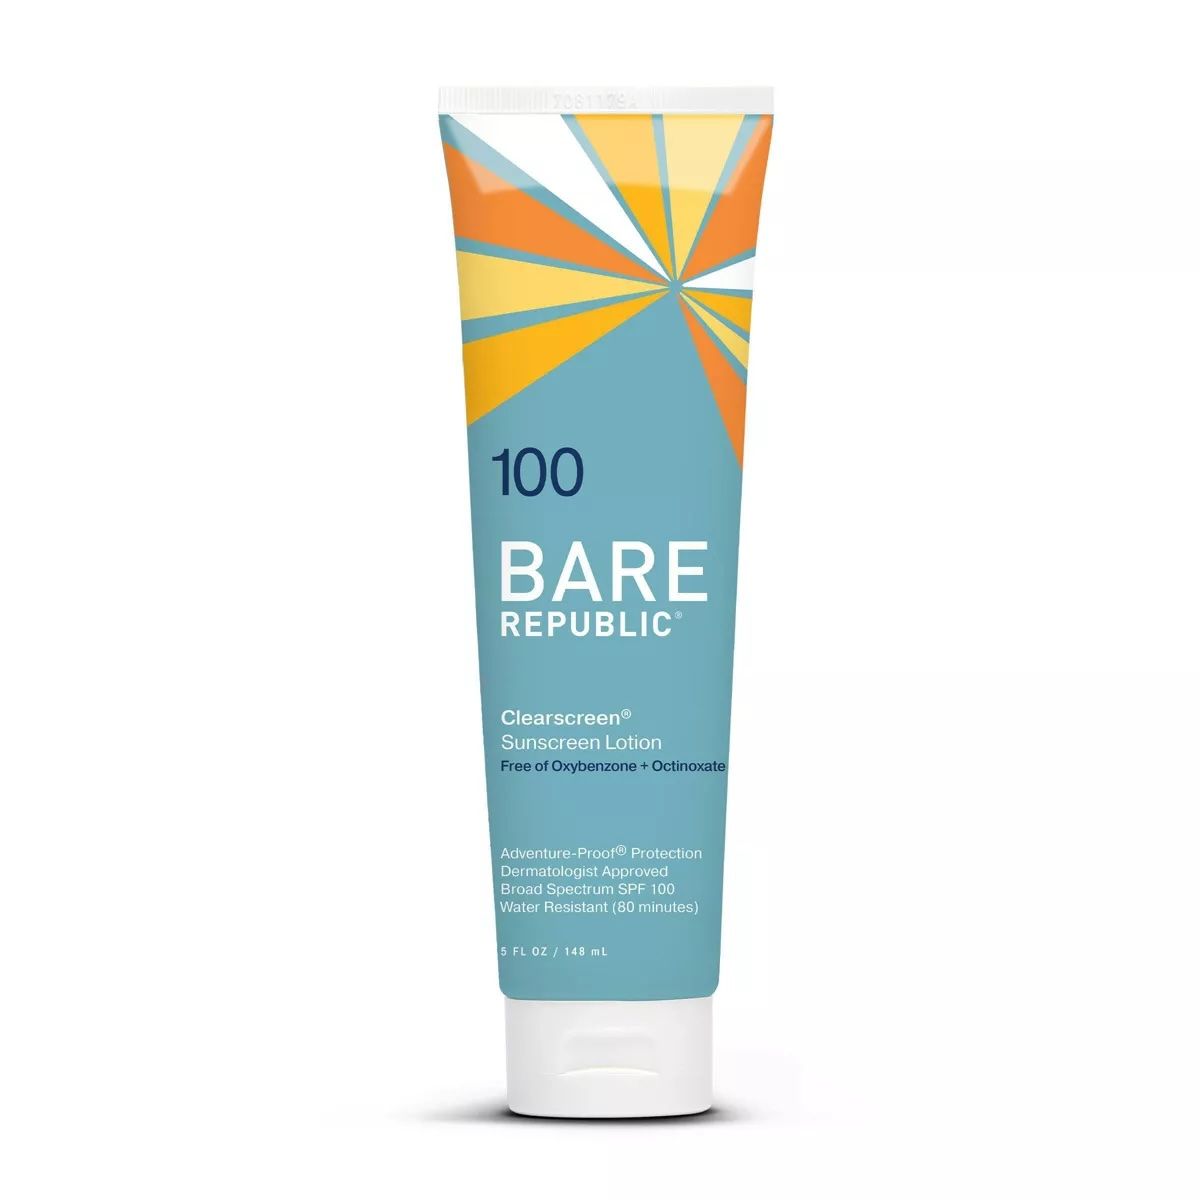 Bare Republic Clearscreen Sunscreen Face Lotion, SPF 100 - 2 fl oz